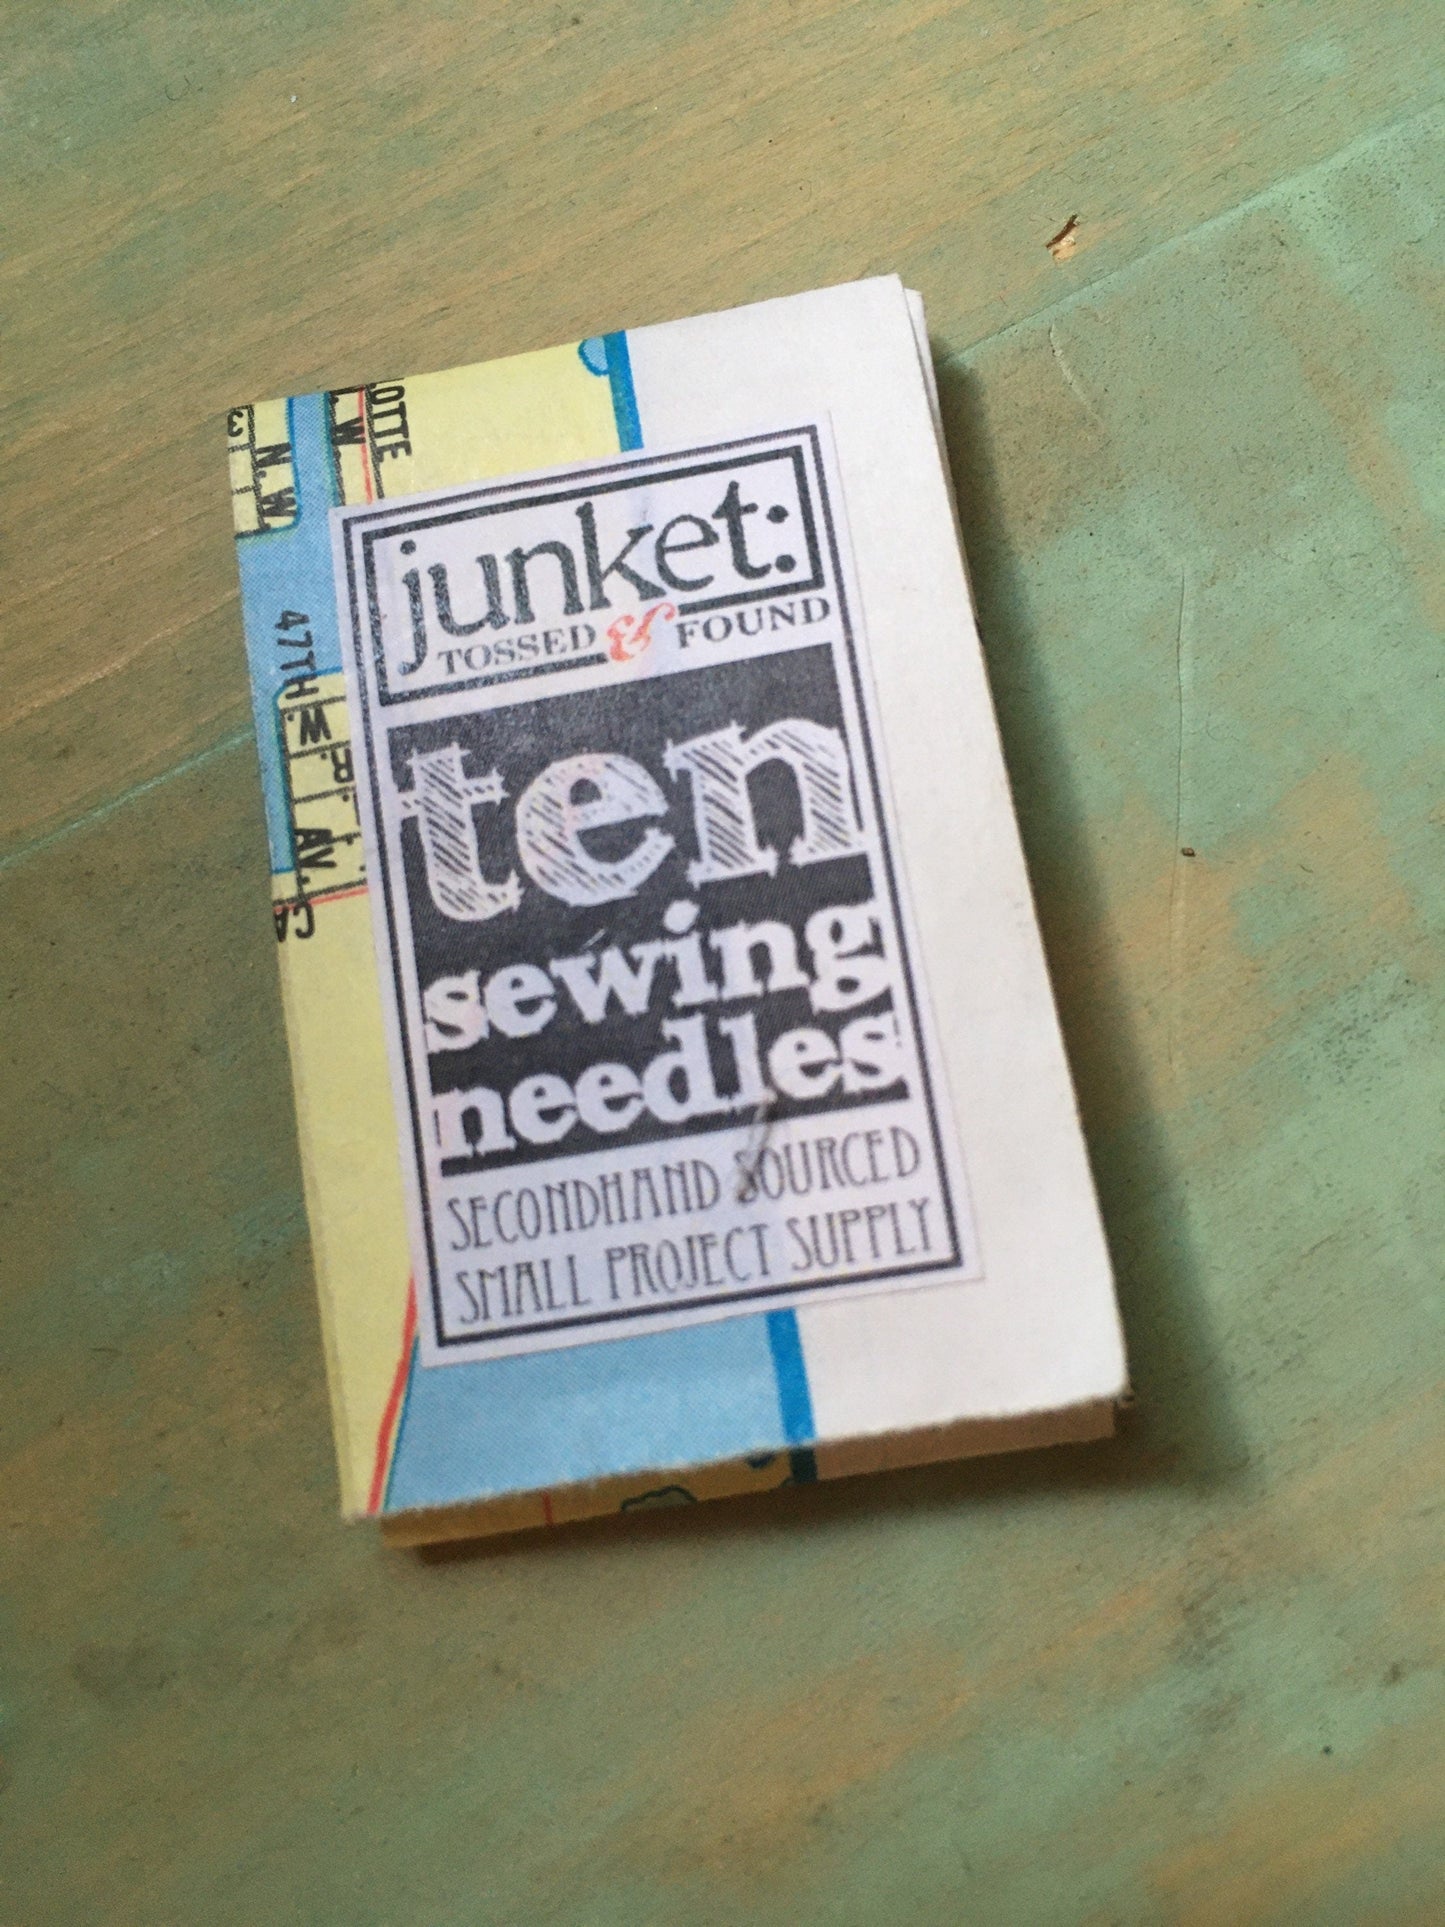 Ten hand-sewing needles - 100% reuse variety pack